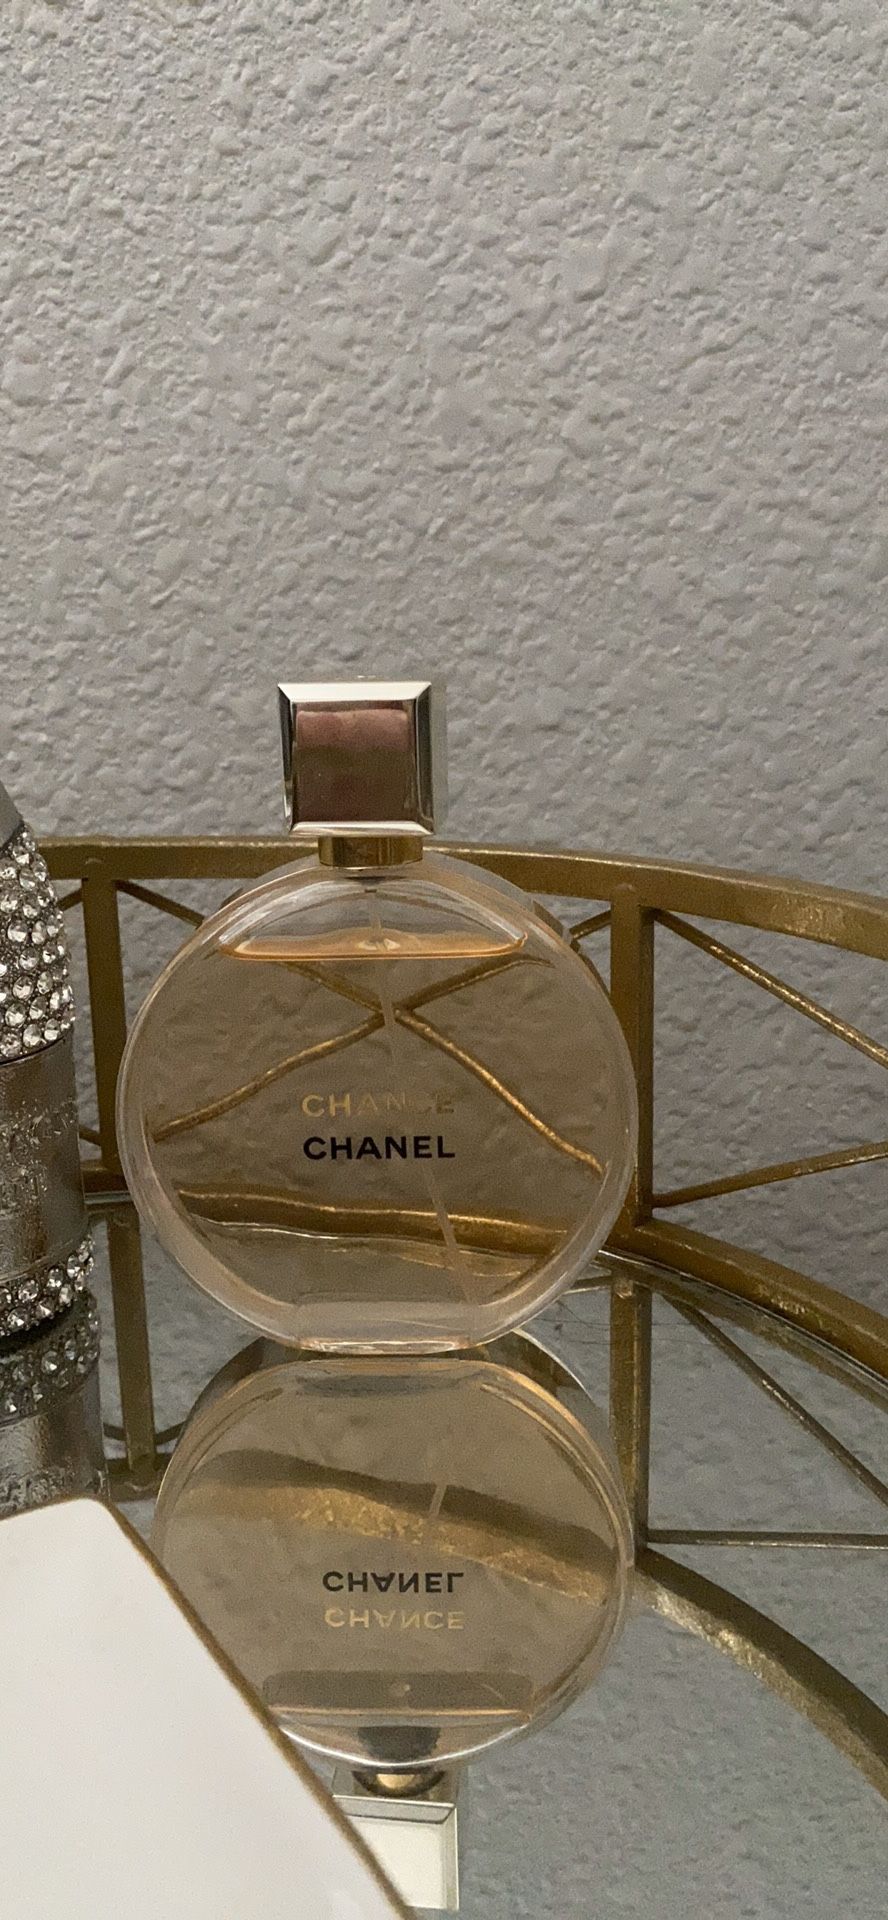 Chanel chance perfume 3.4oz